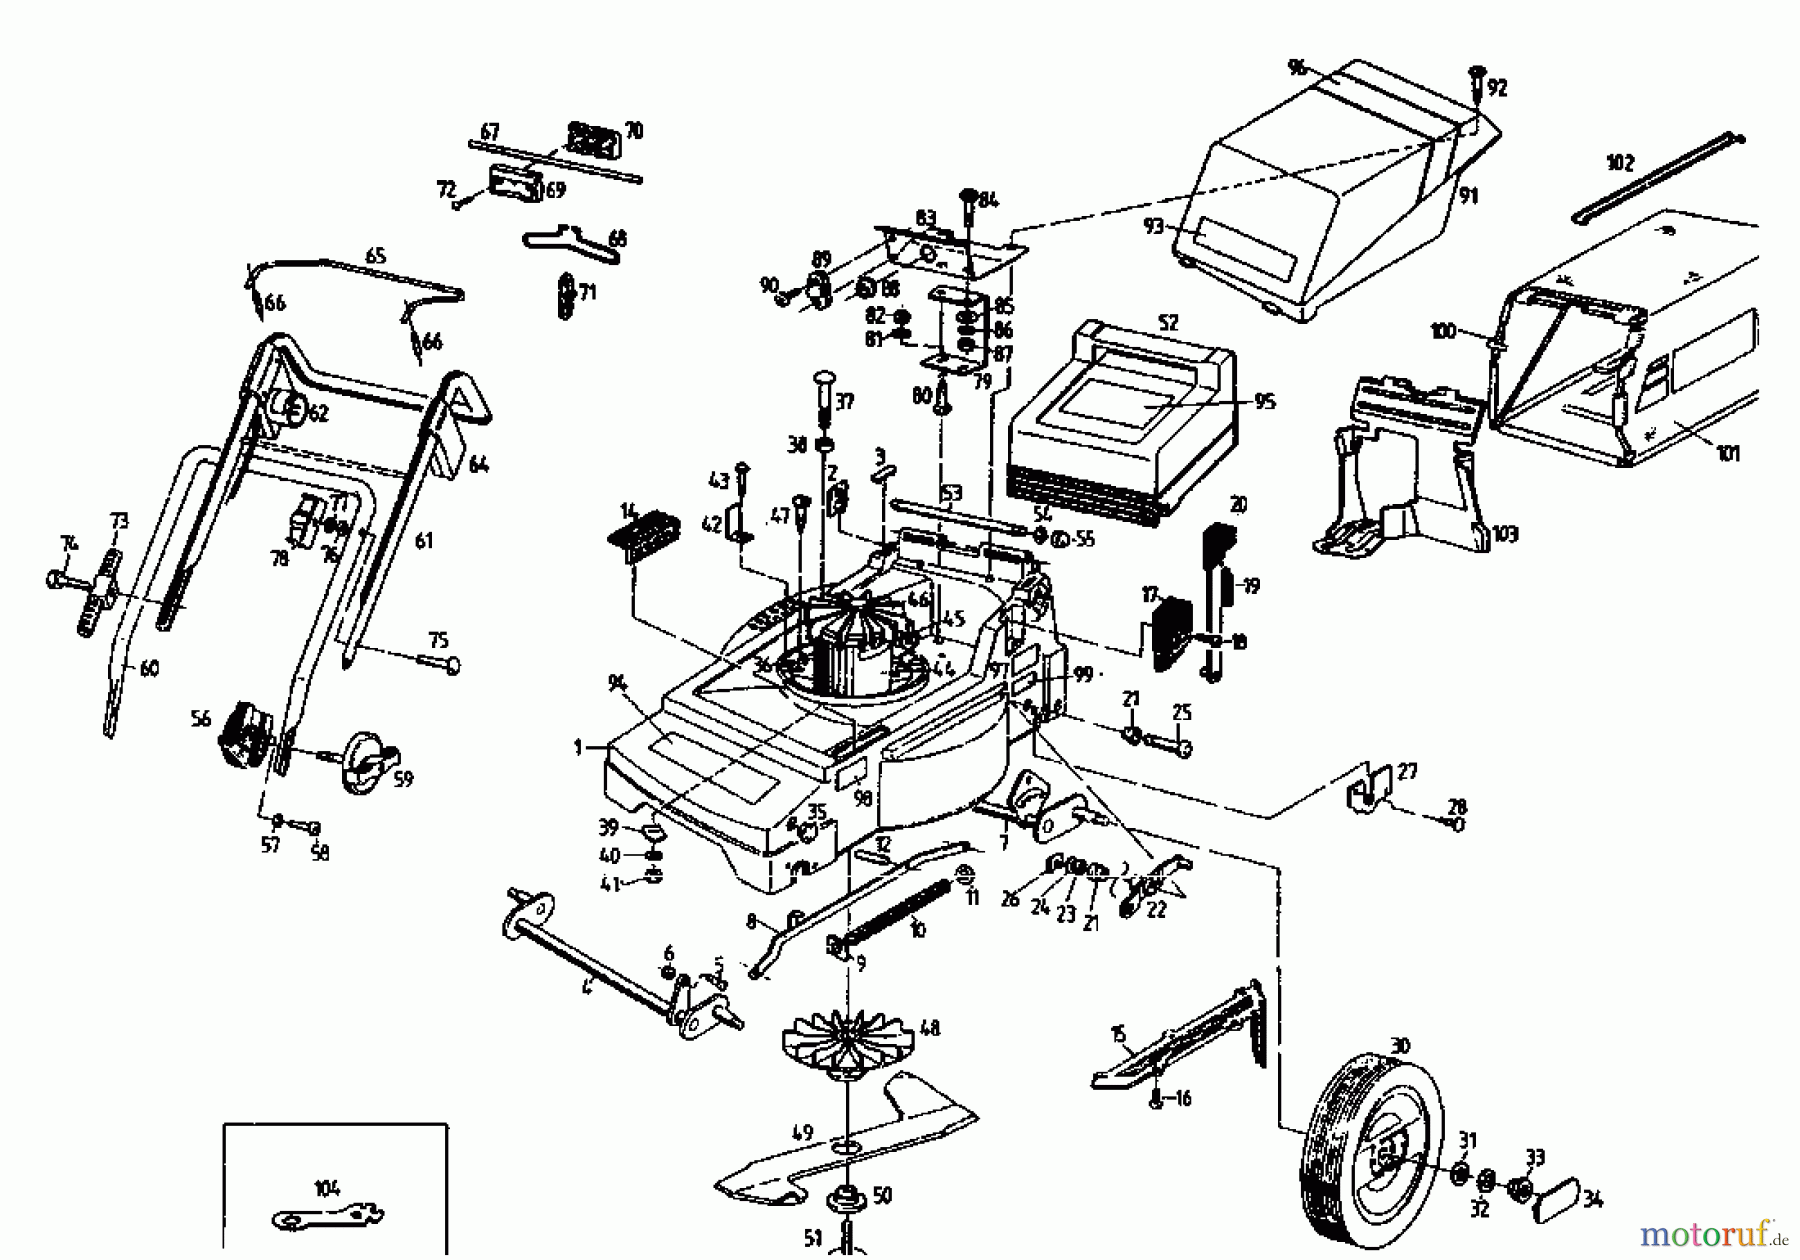  Gutbrod Electric mower MHE 400 04019.03  (1995) Basic machine